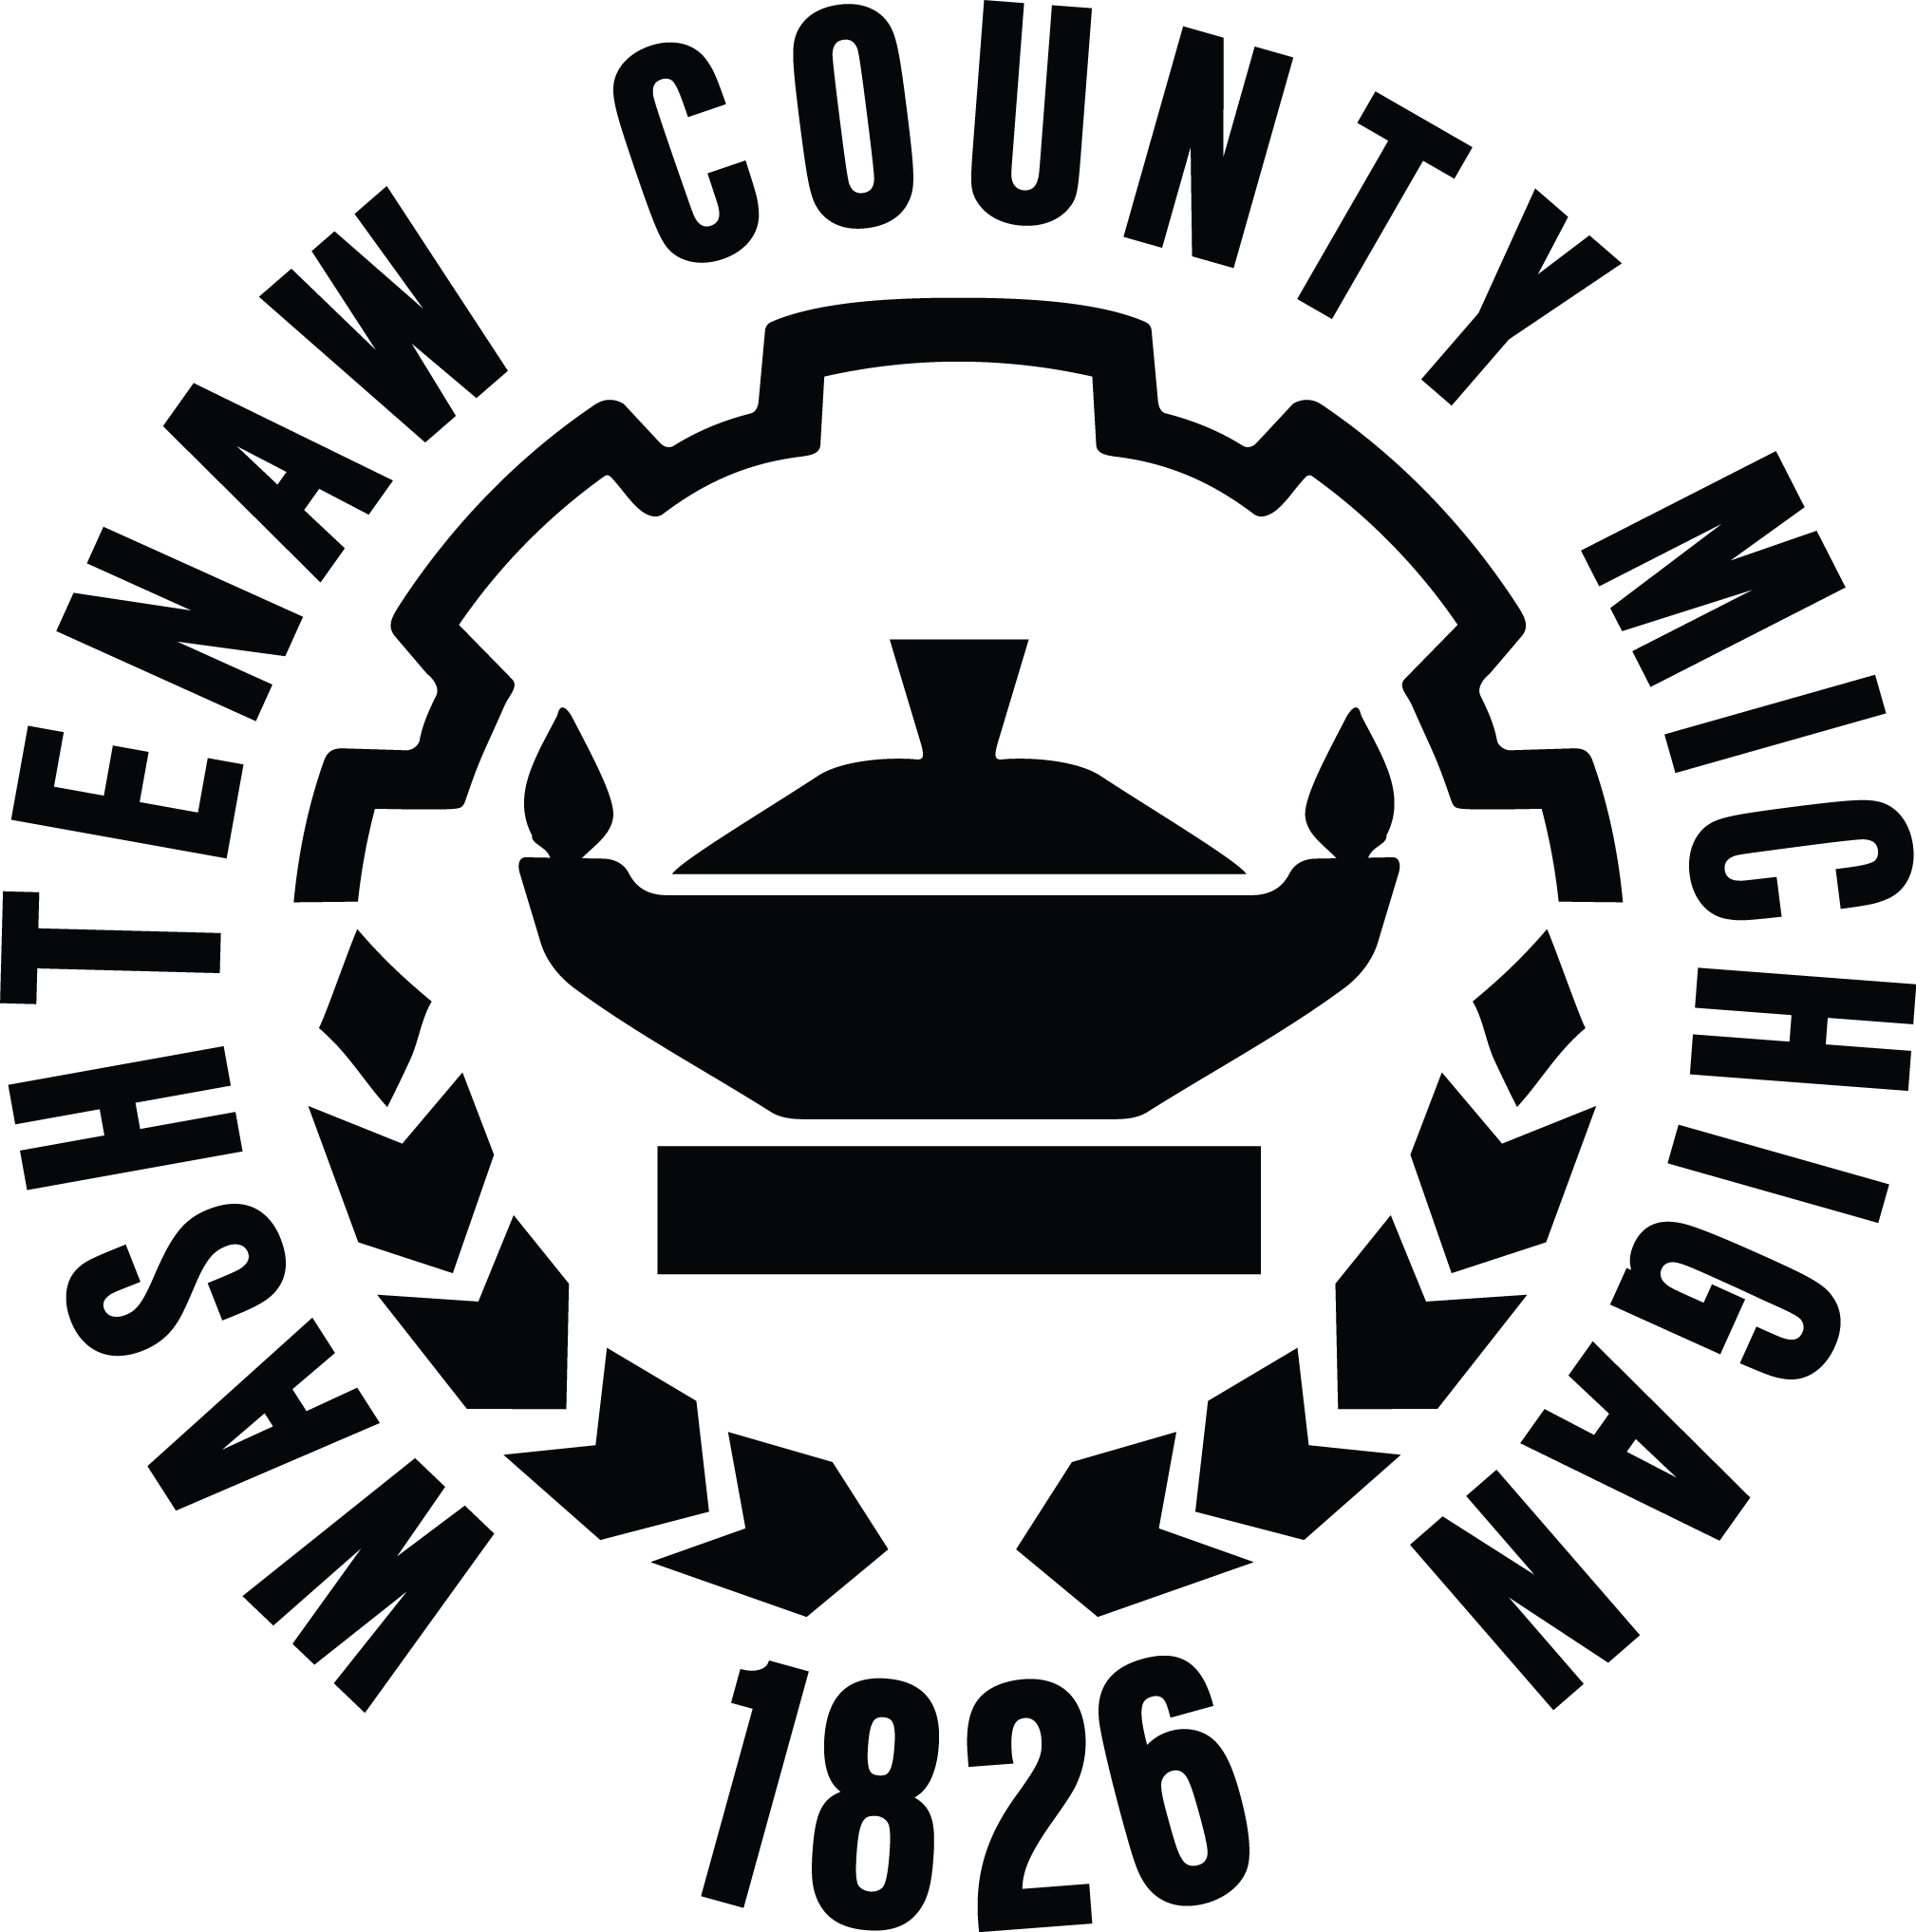 Washtenaw County seal